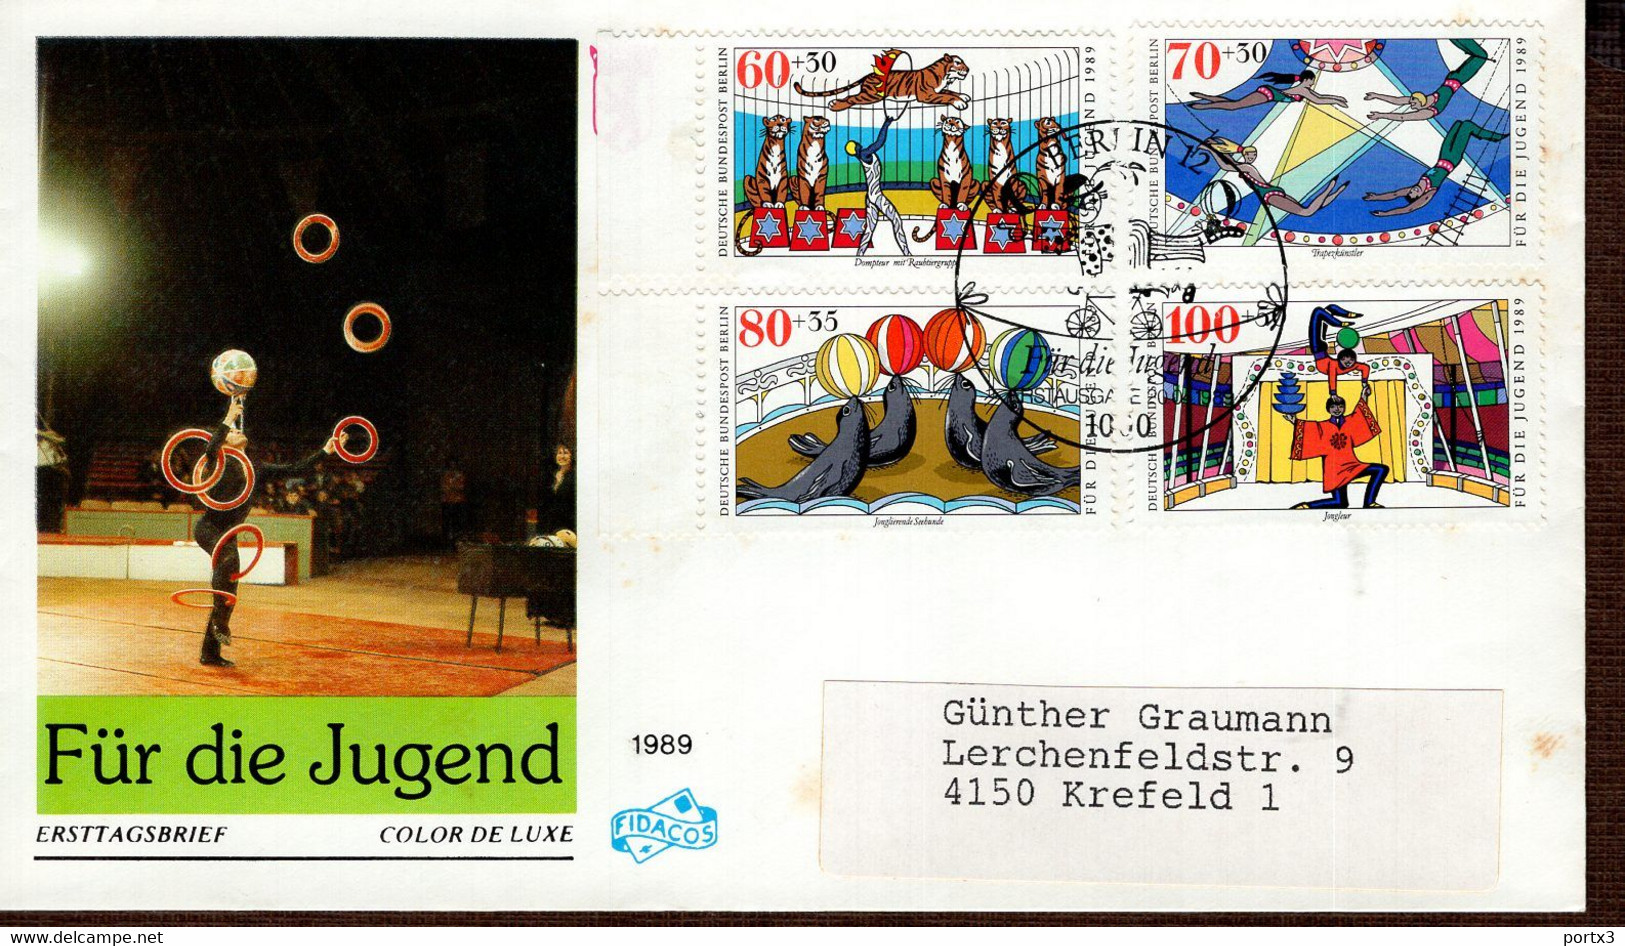 Berlin FDC aus 1989 ex 9 items gestempelt / used / oblitéré (Berl 048)